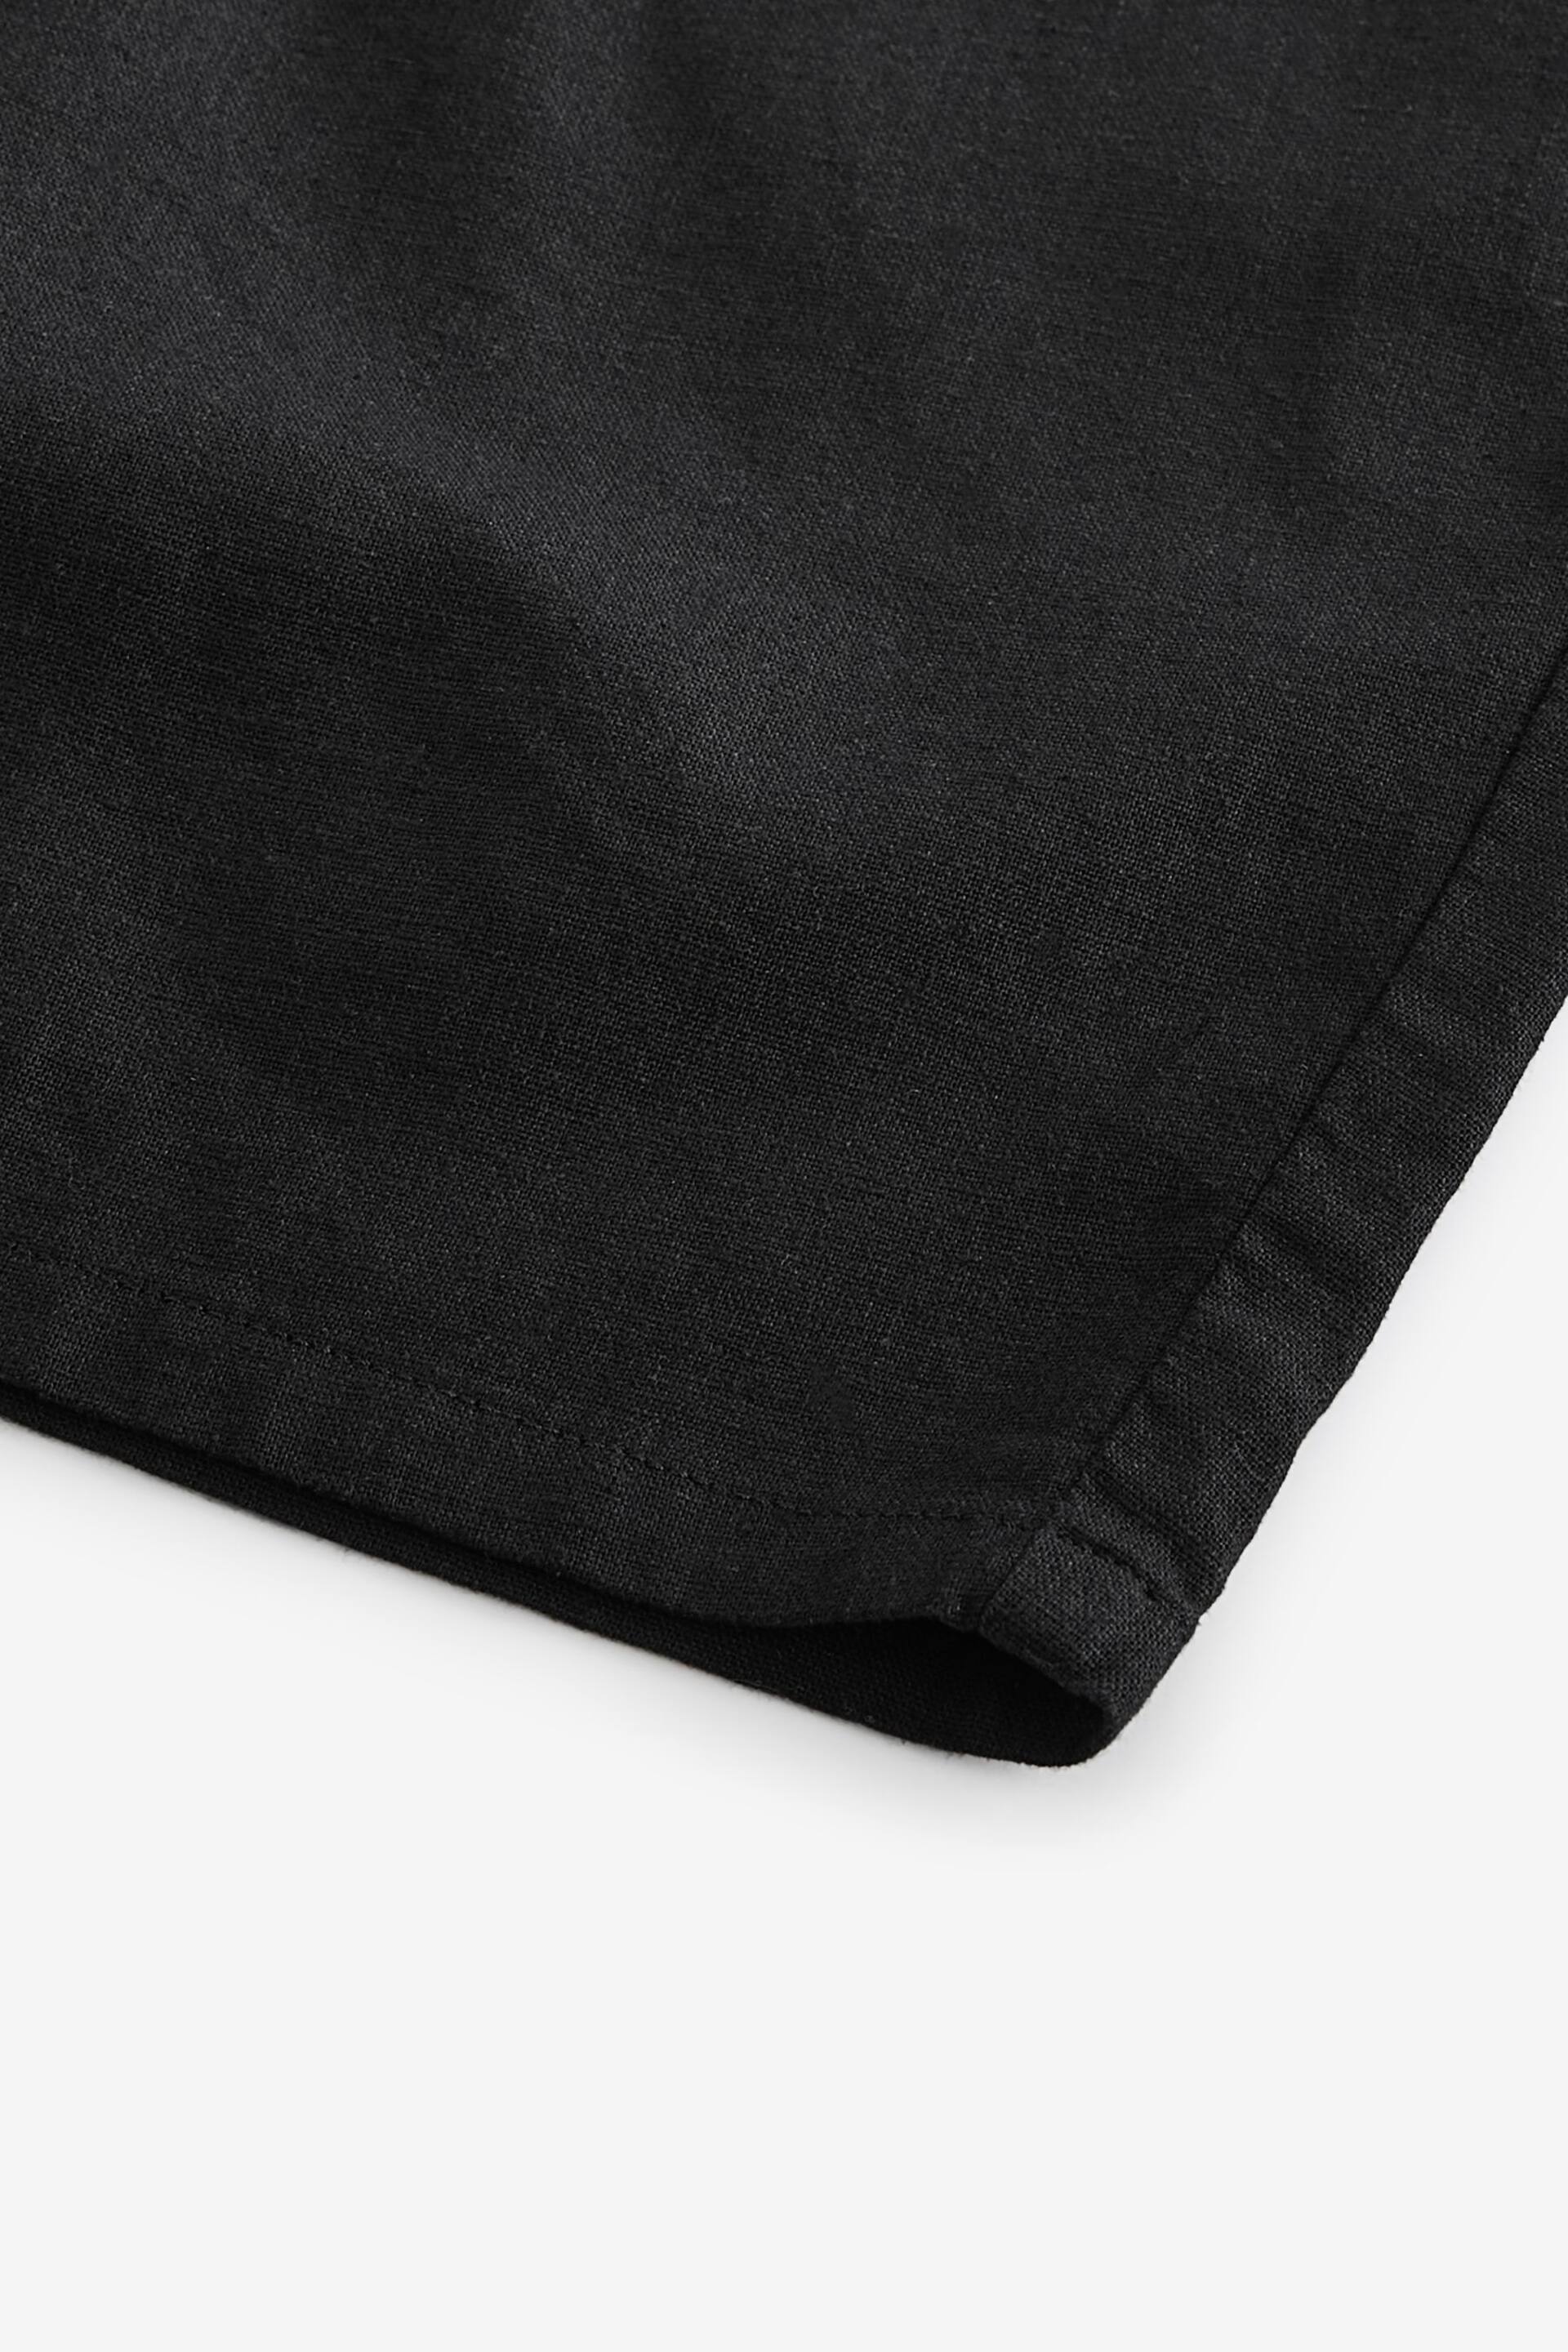 Black Linen Viscose Shorts - Image 7 of 10